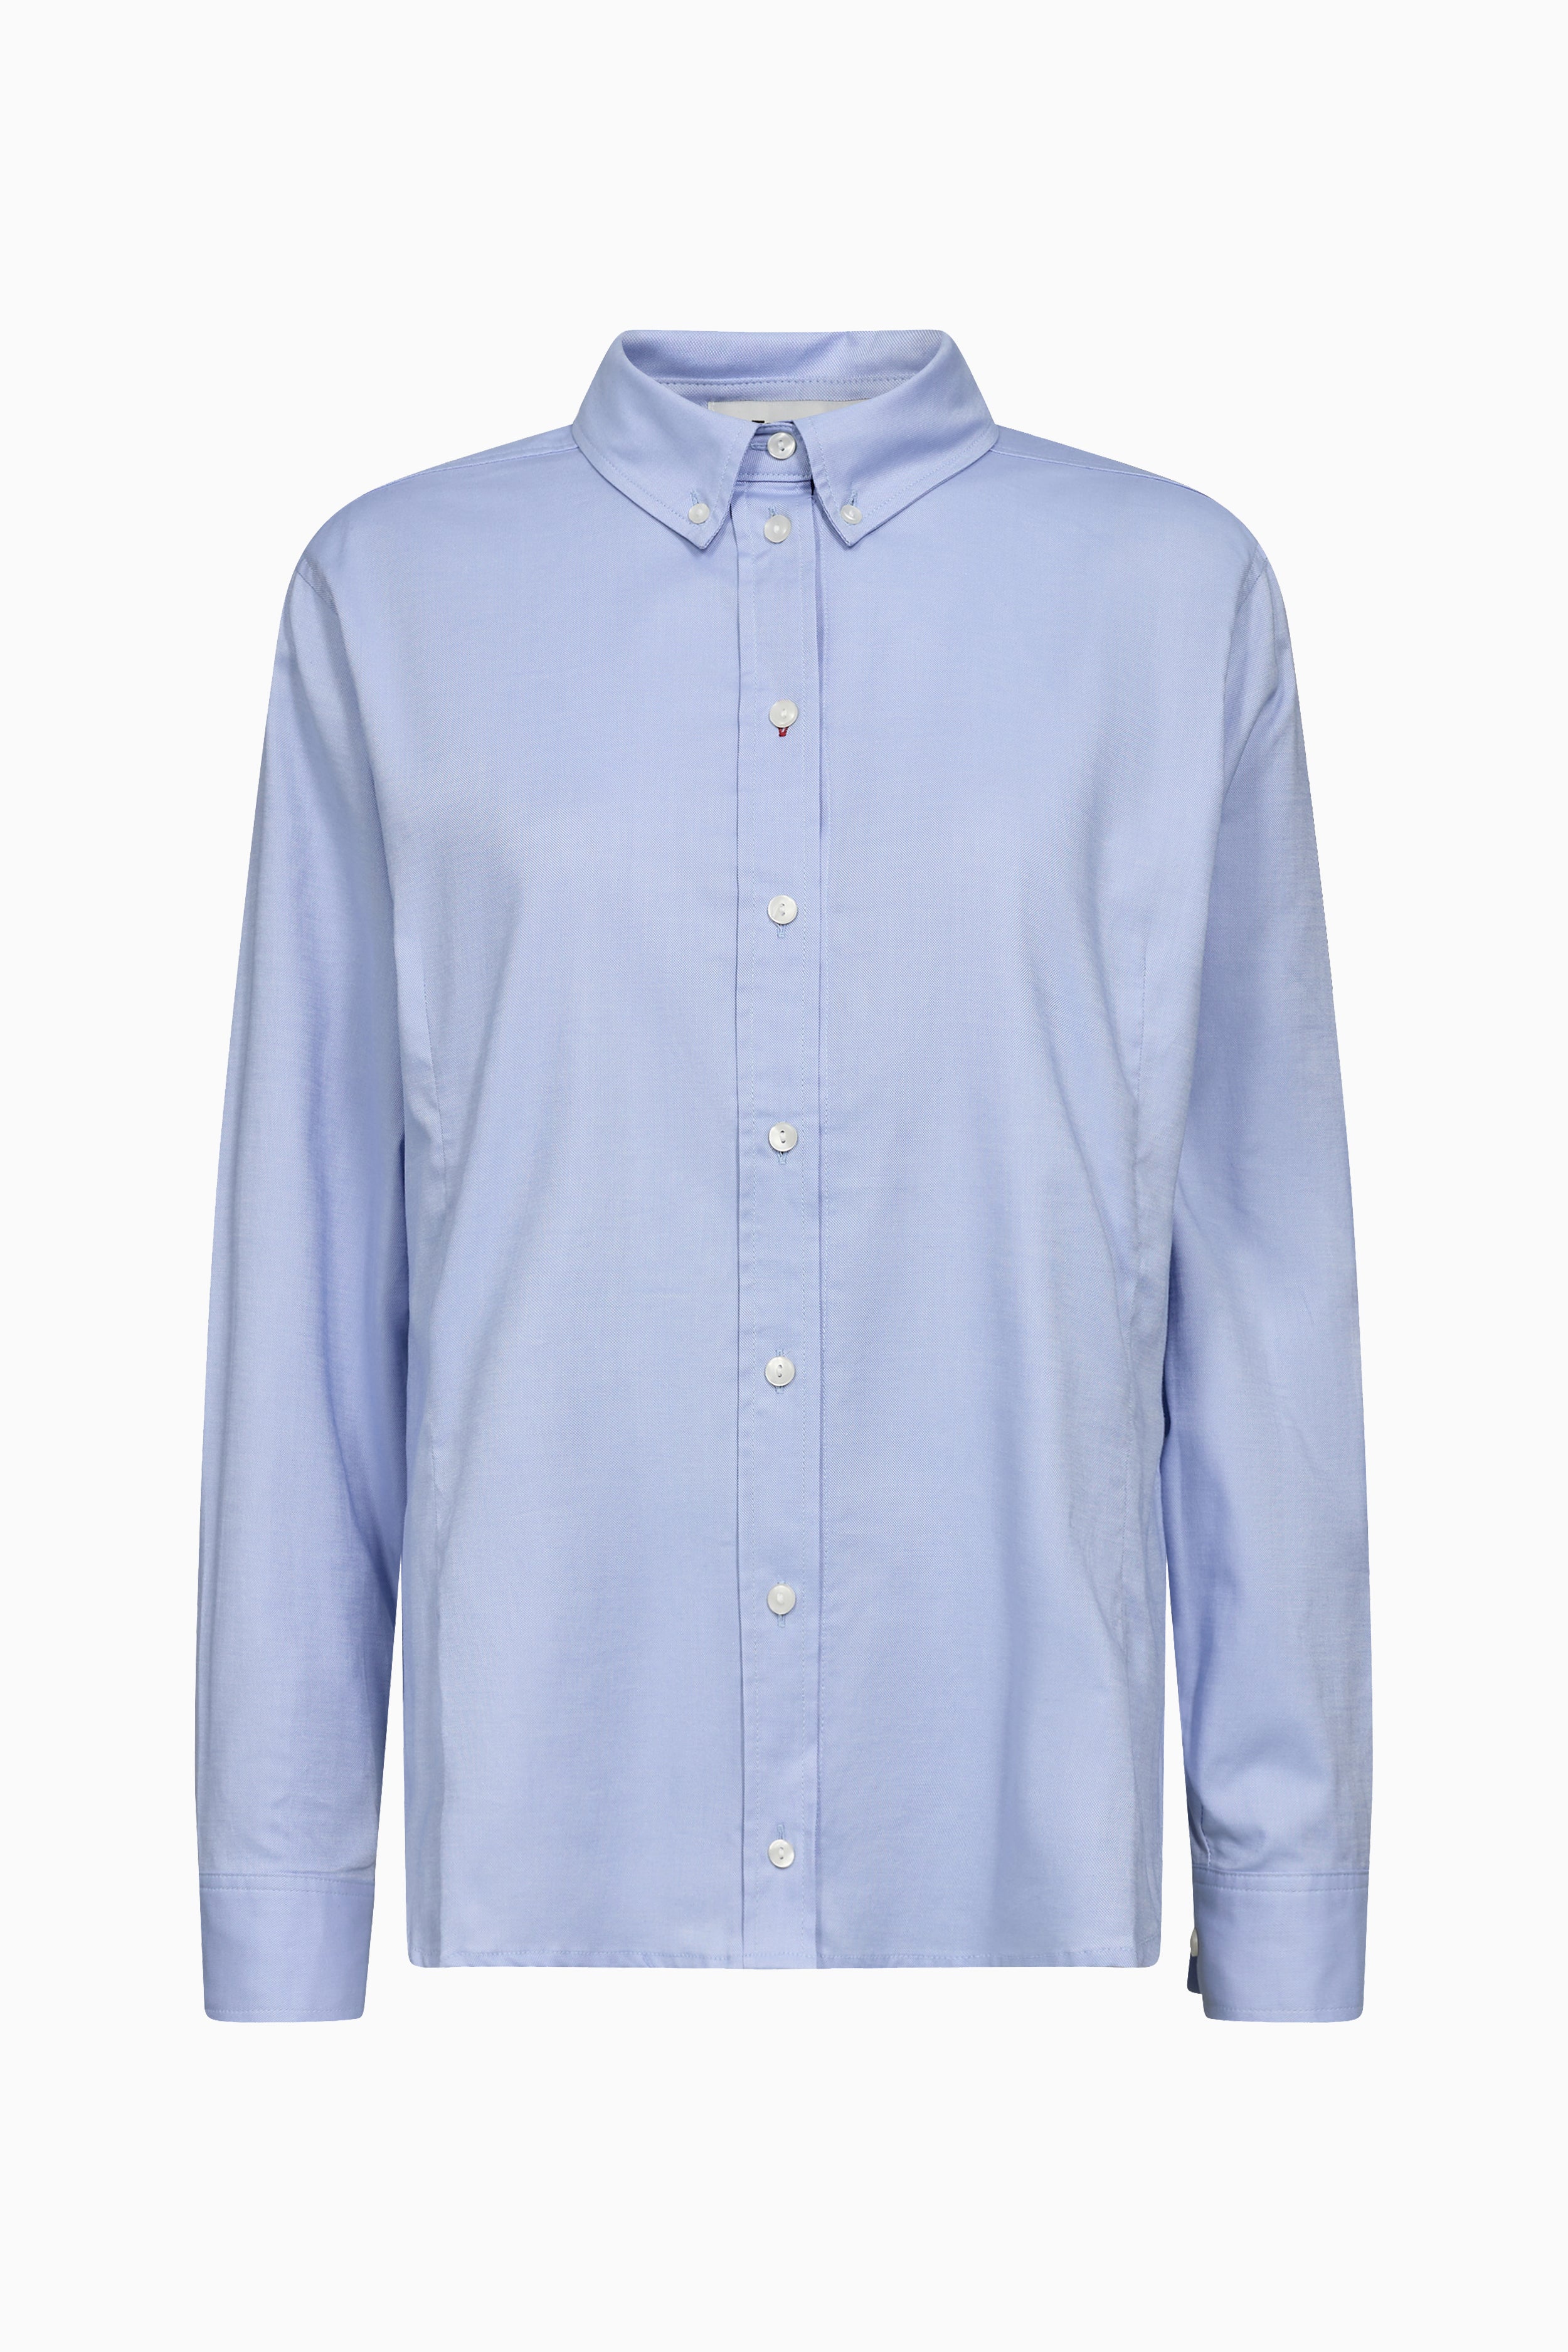 Tomorrow TMRW Mercer Shirt - Oxford Shirts & Blouses 5 Blue